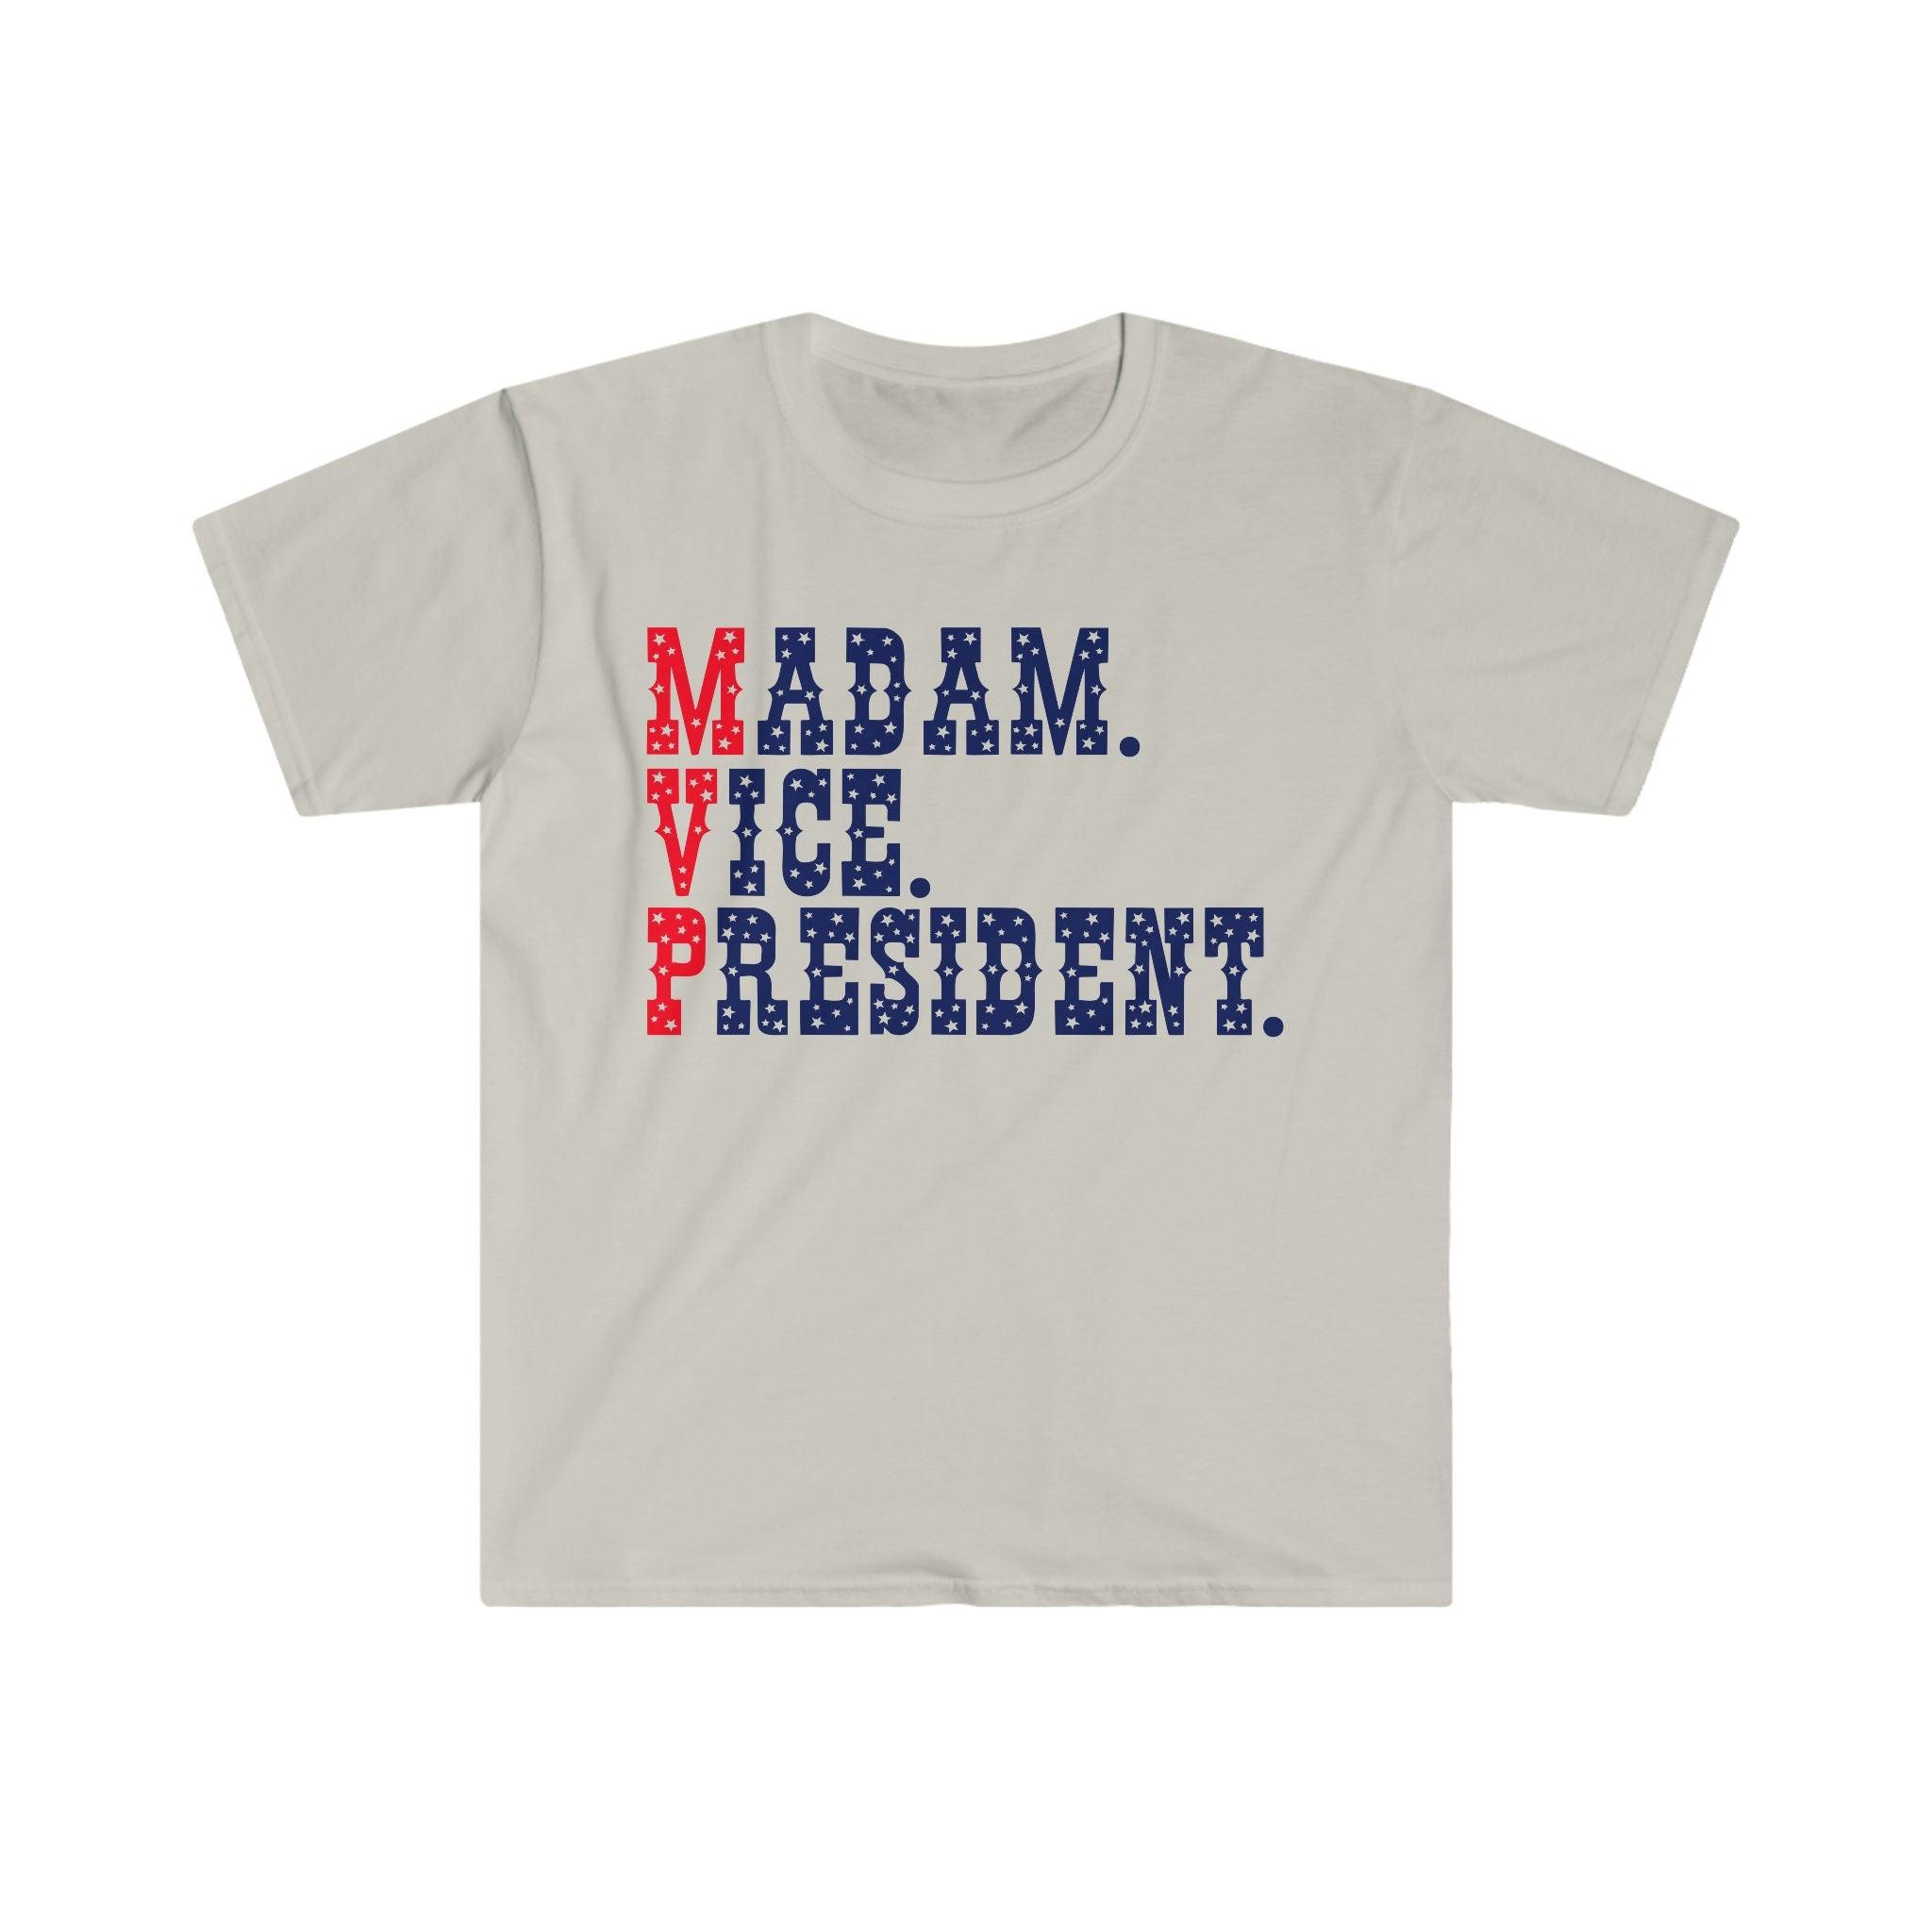 Fru næstformand | Madam VP T-Shirts First Woman Vice President Indsættelse Feminist Gift Tee Unisex T-shirt, Demokrater, Kamala Harris - plusminusco.com